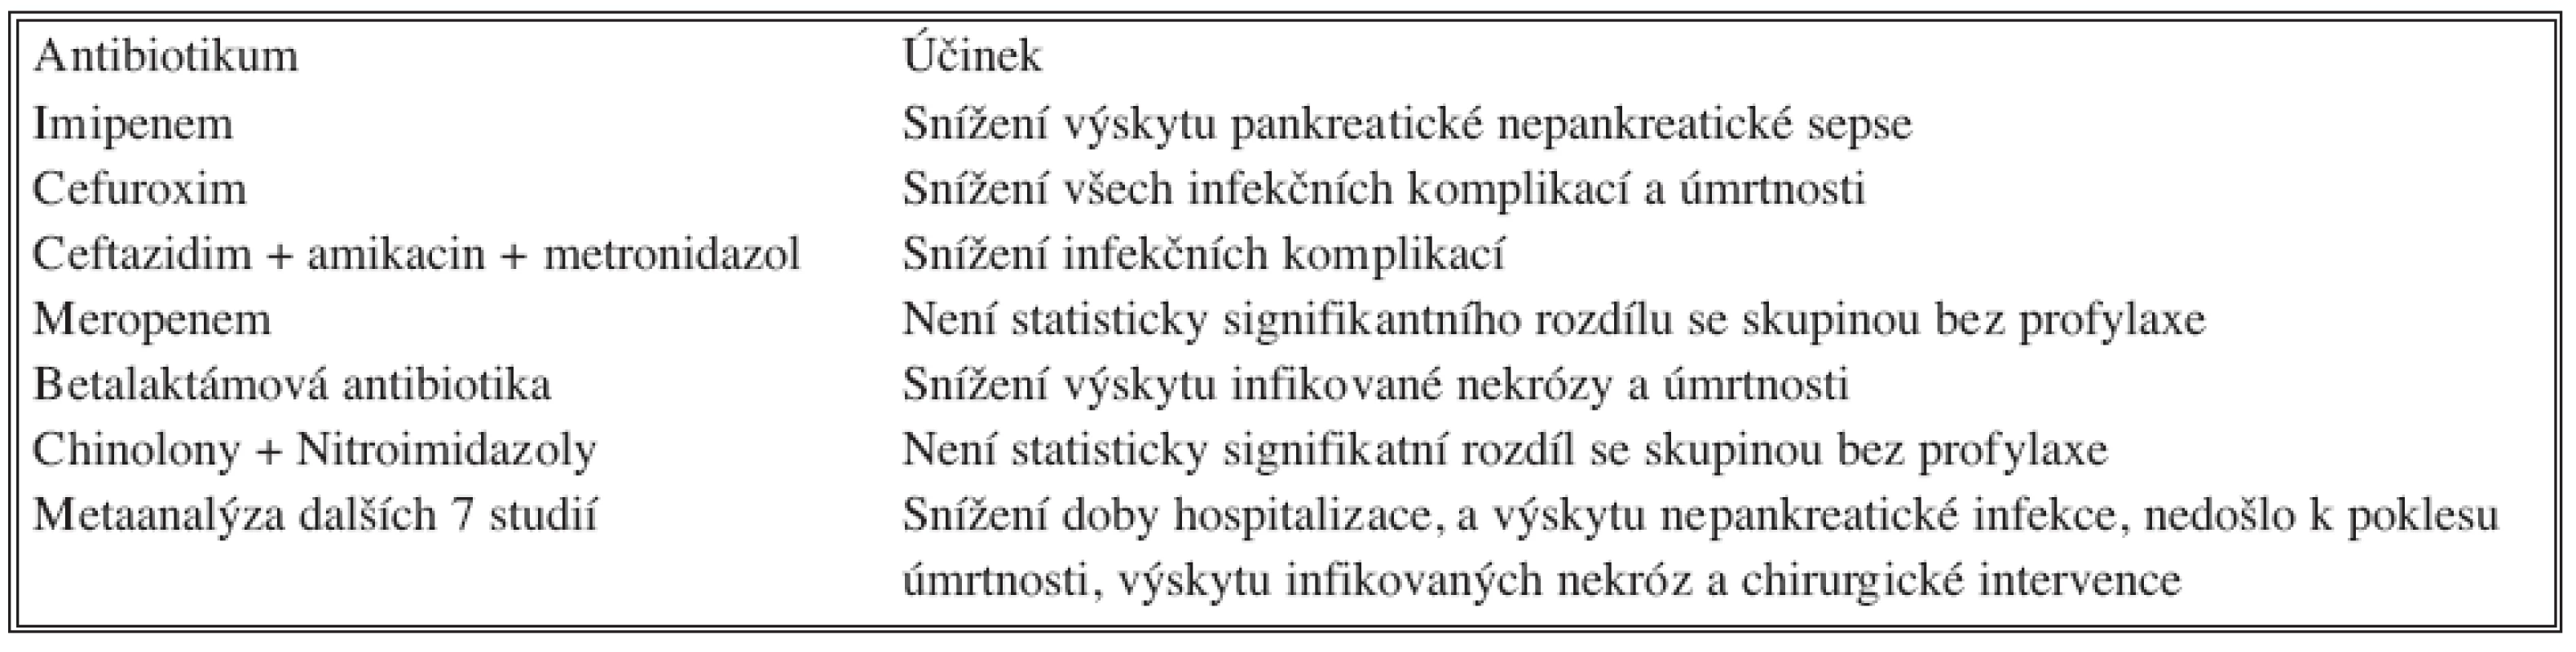 Antimikrobní profylaxe u pankreatické nekrózy
Tab. 6. Antimicrobial prophylaxis in pancreatic necrosis